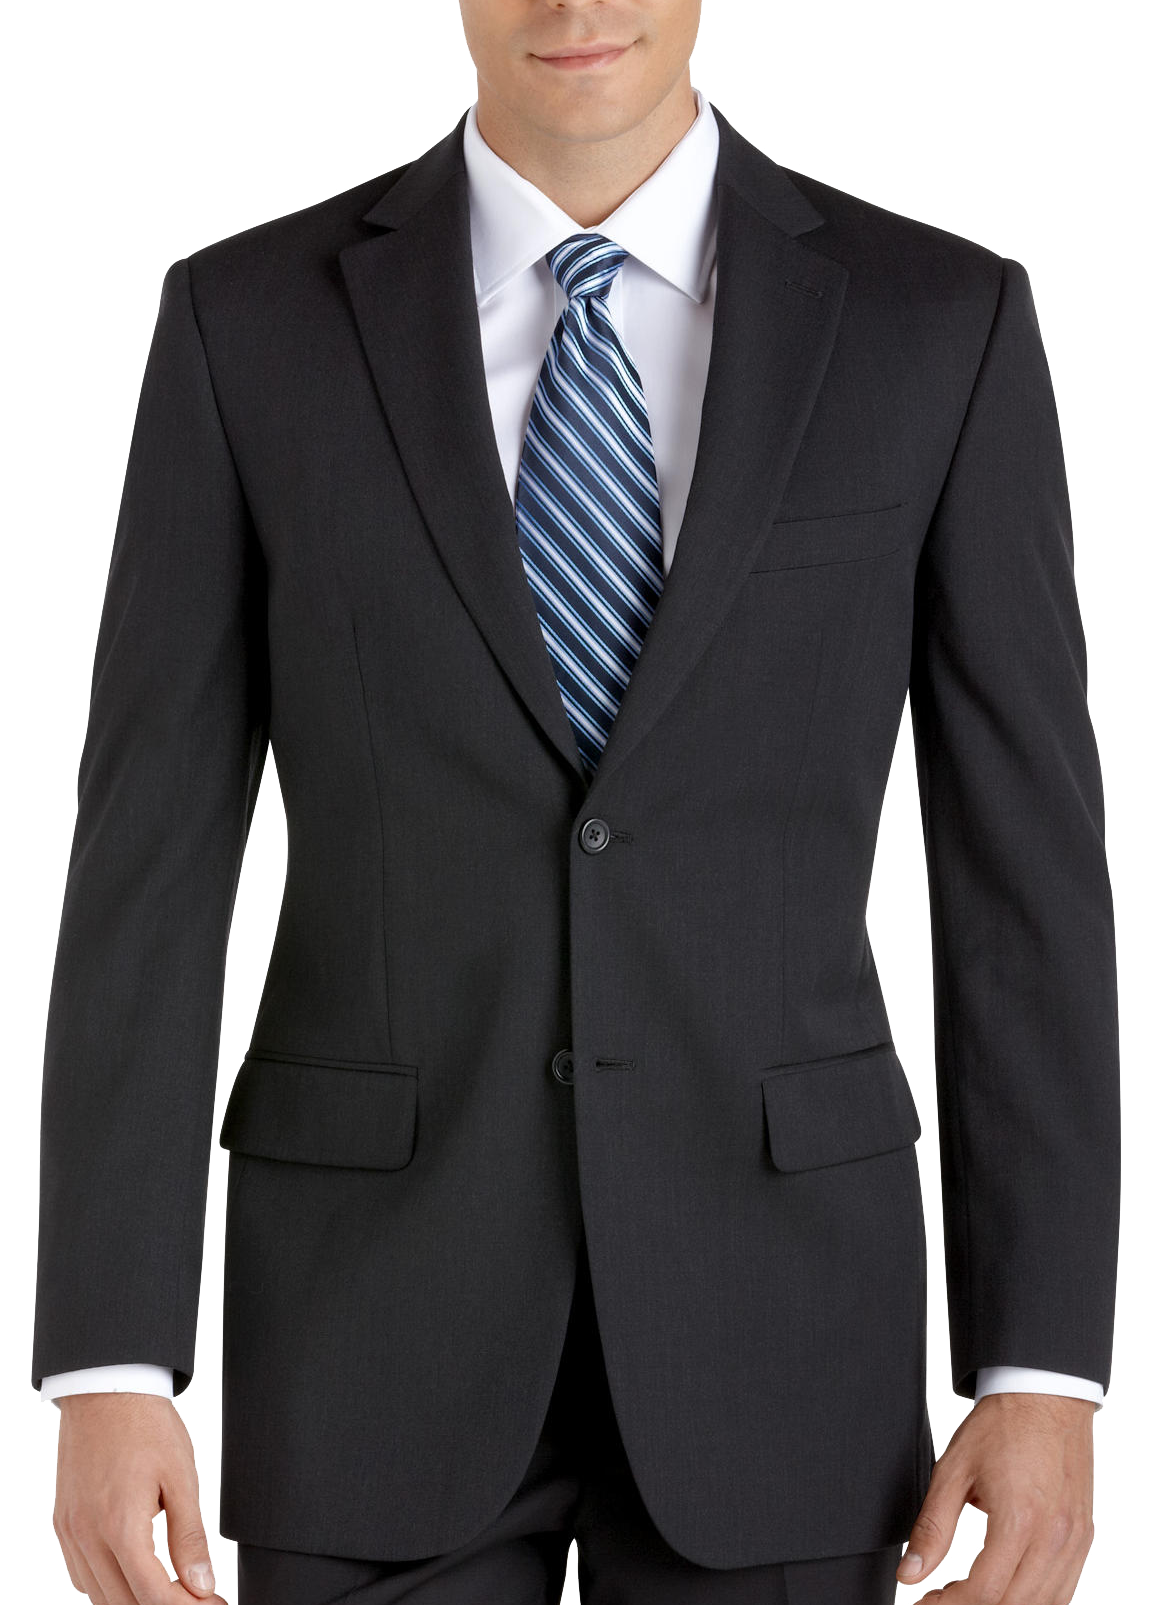 Expertise heb vertrouwen Beg Pronto Uomo Platinum Executive Suit Separates Coat, Black - Men's Suits |  Men's Wearhouse